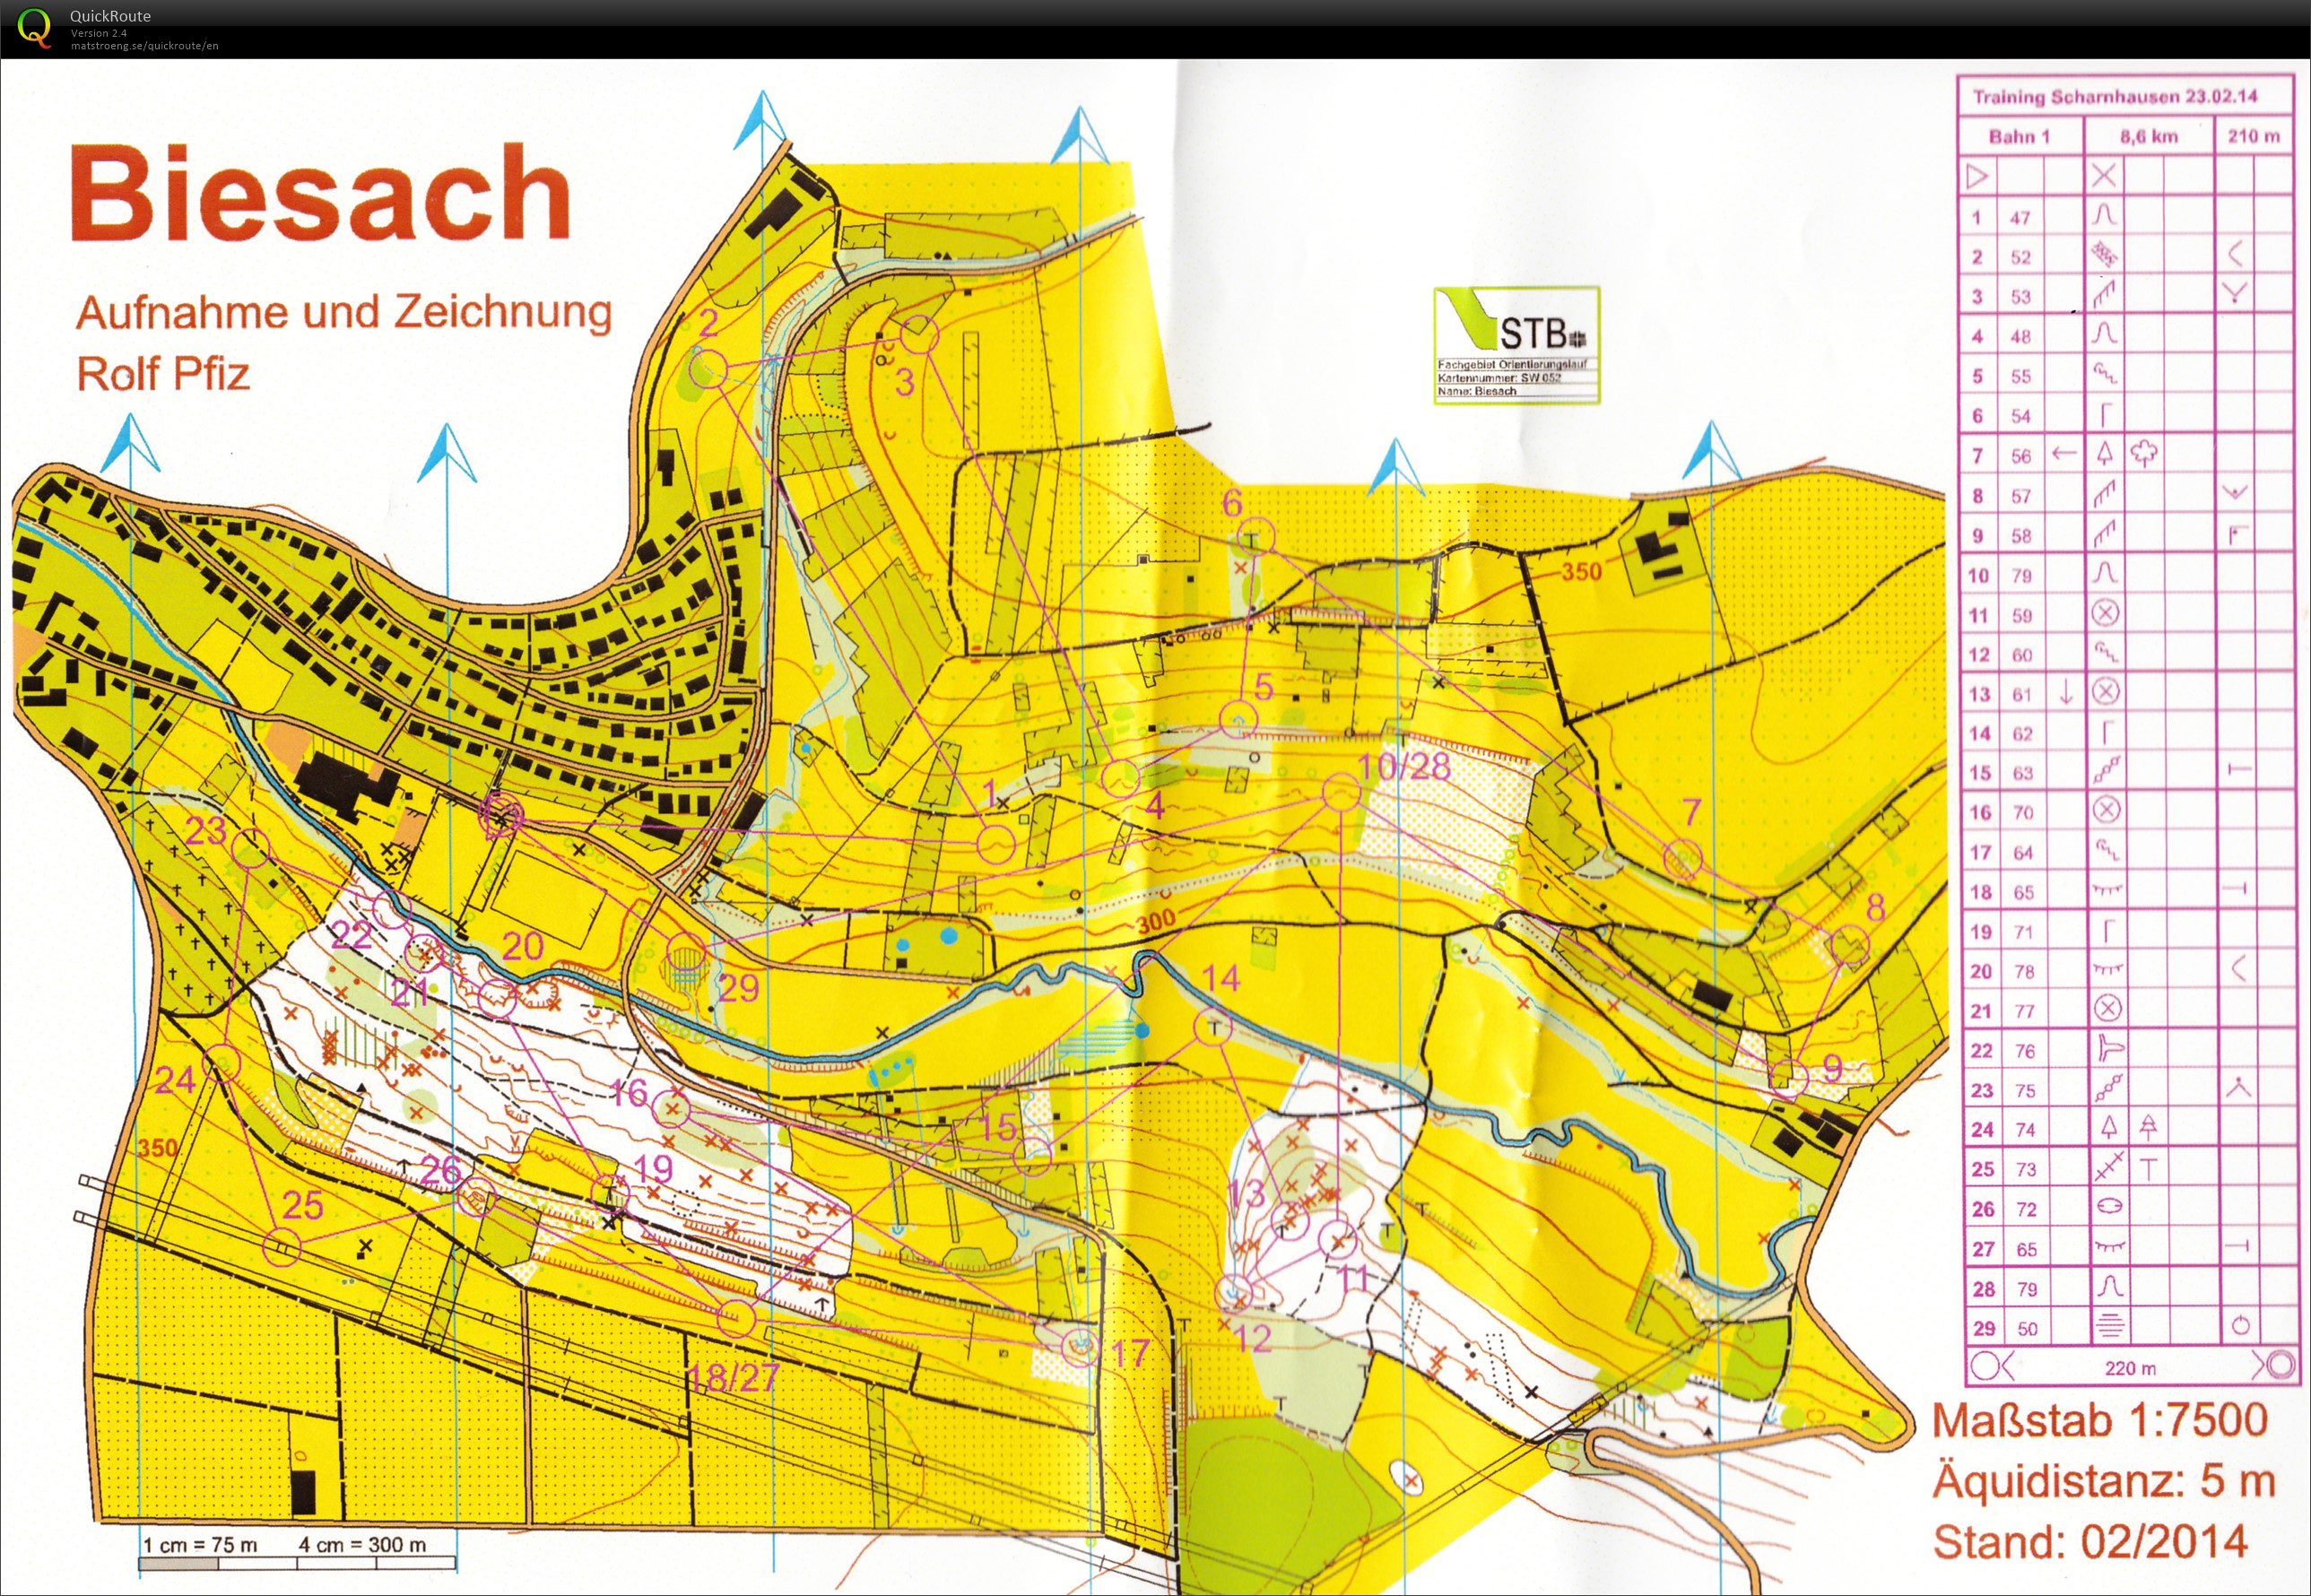 Training Biesach (23-02-2014)